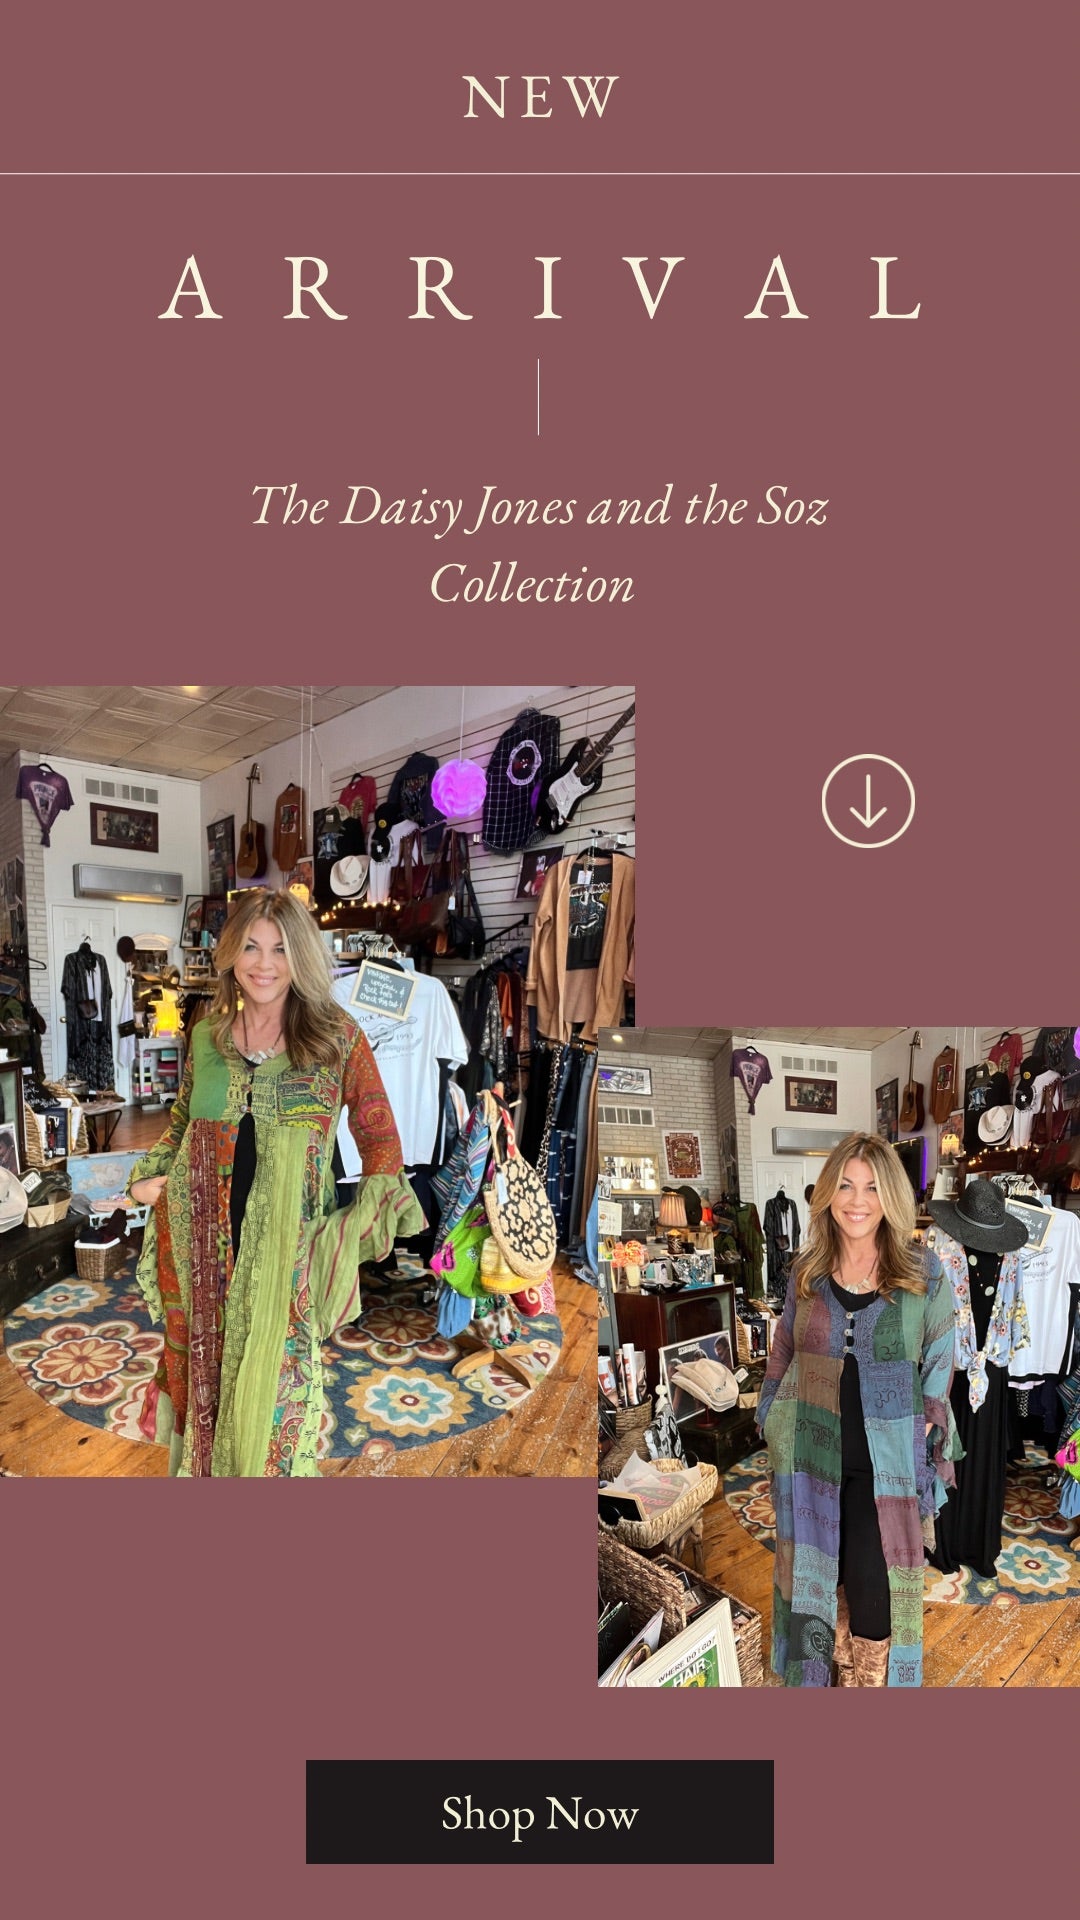 The Daisy Jones Collection